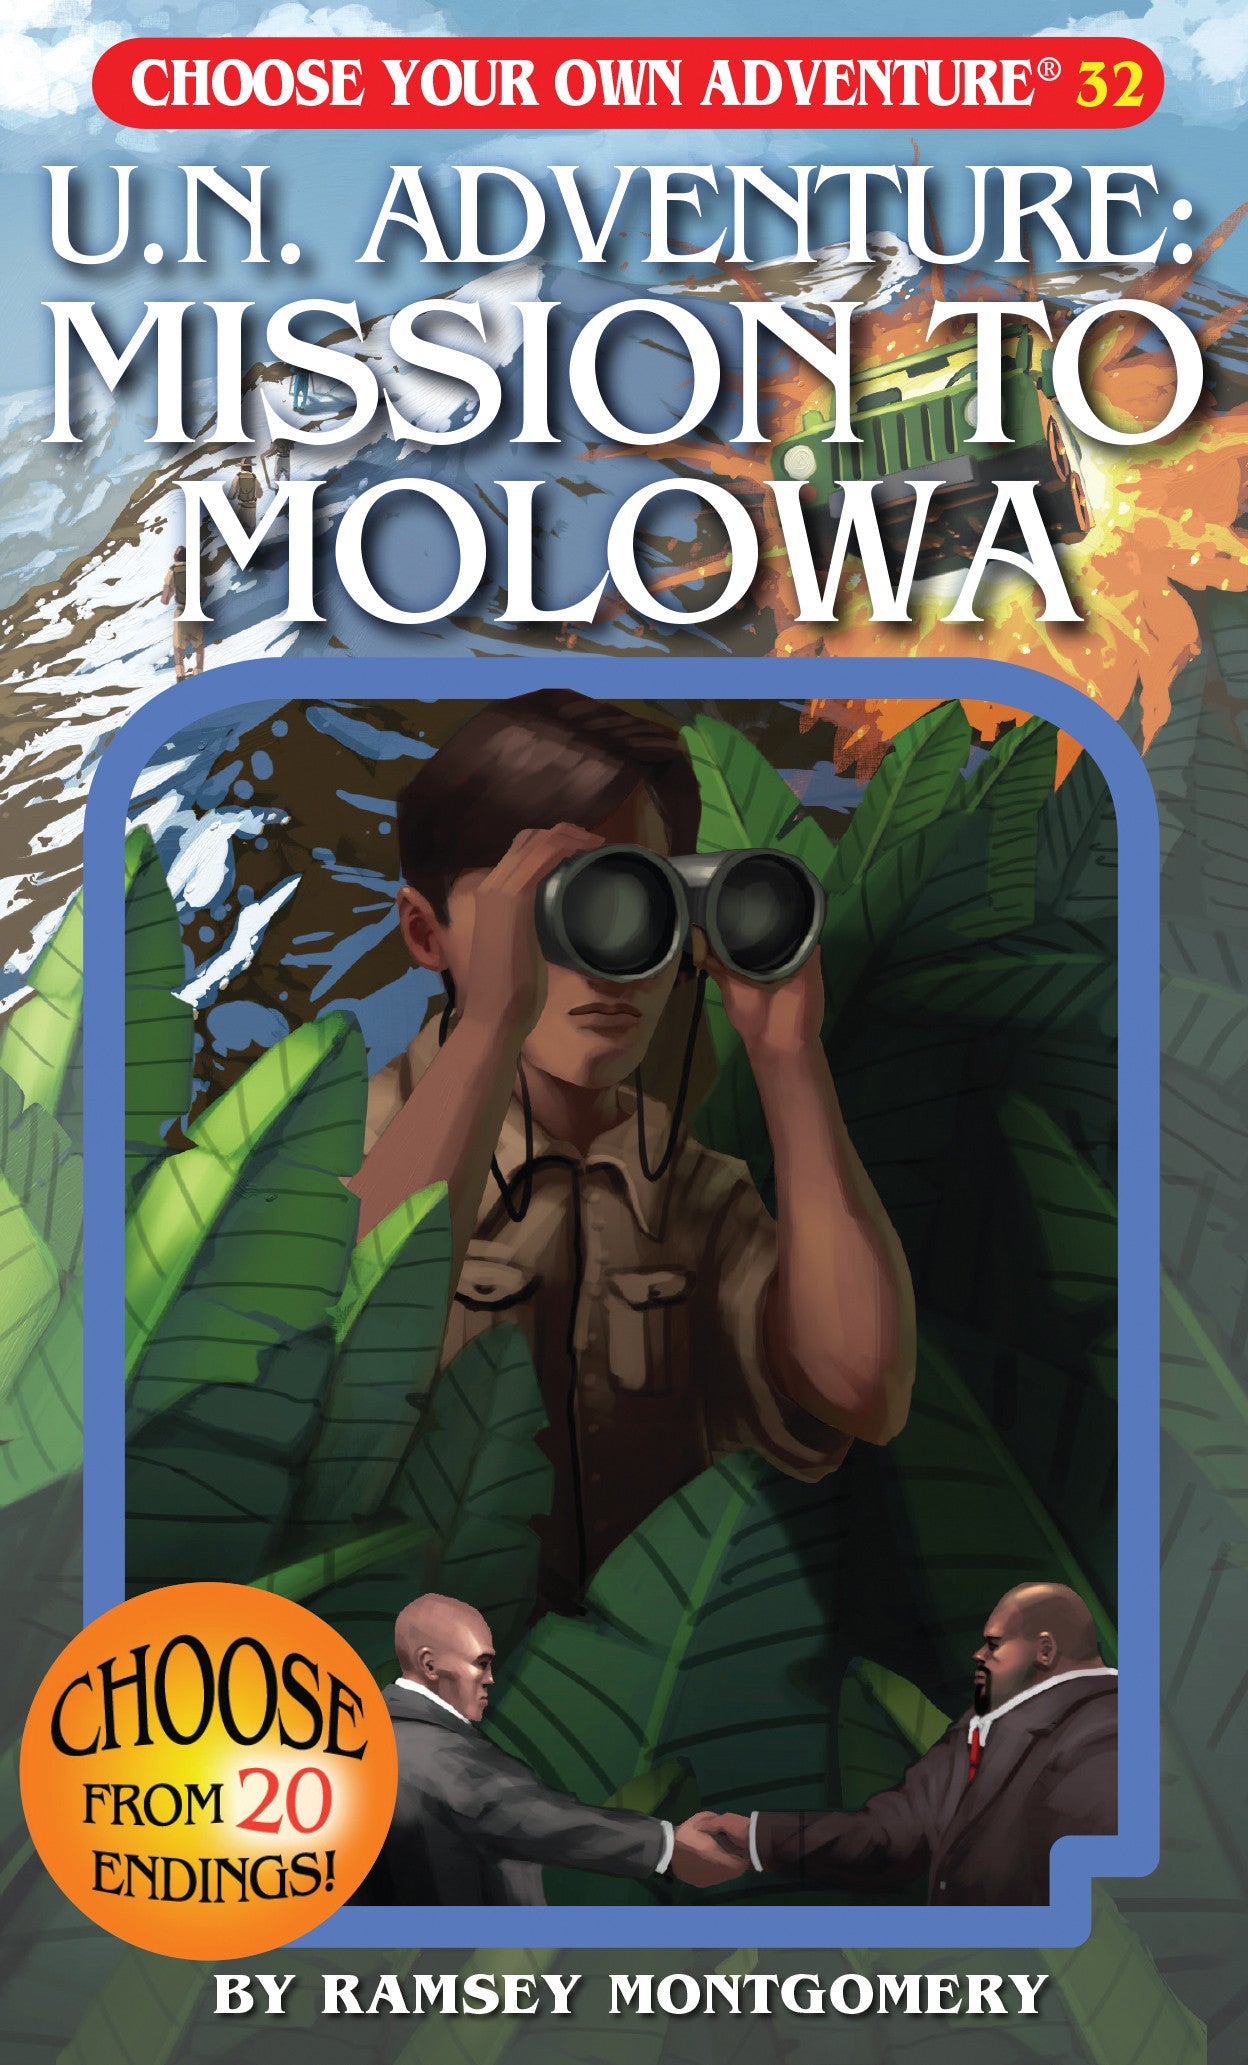 Mission to Molowa